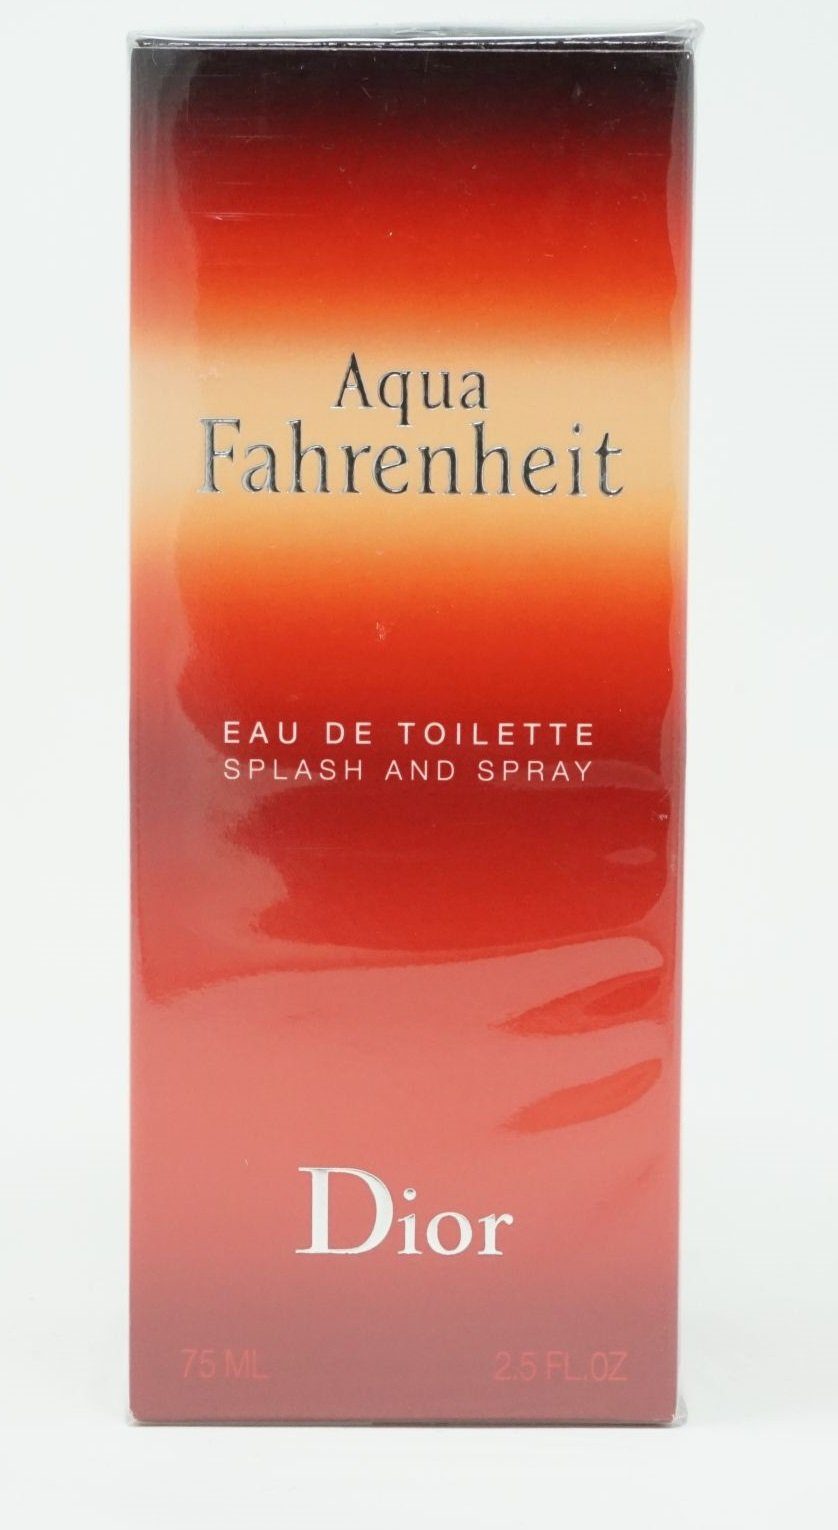 Eau Splash Eau and Toilette de Aqua Dior 75ml de Toilette Spray Dior Fahrenheit